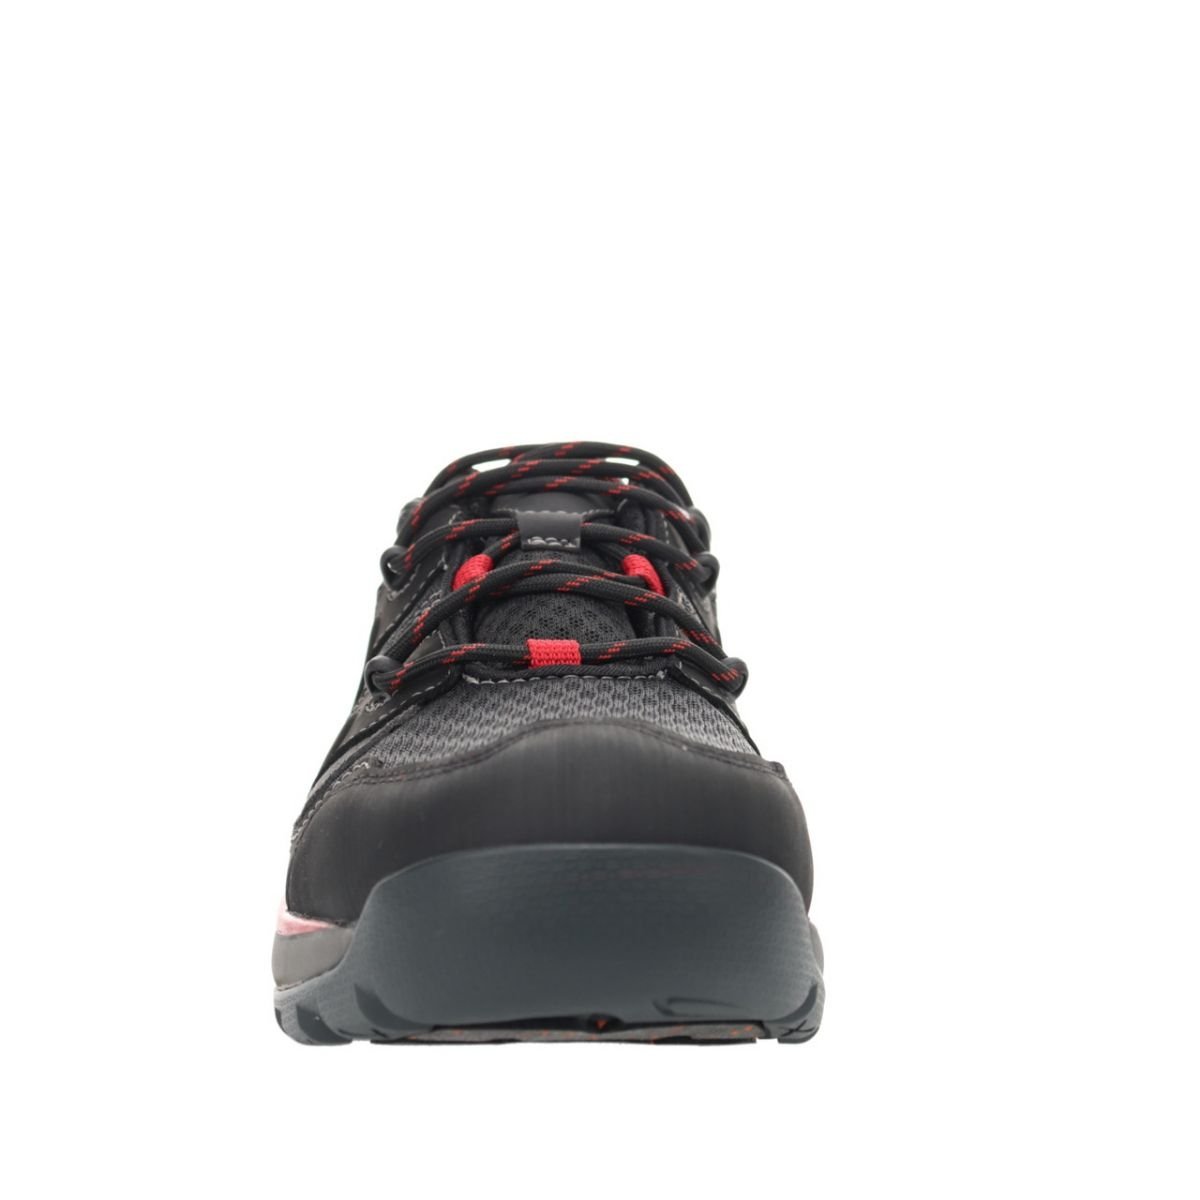 Propet Men's Vercors Hiking Shoe Black/Red - MOA002SBRD BLACK/RED - BLACK/RED, 10.5 XX-Wide